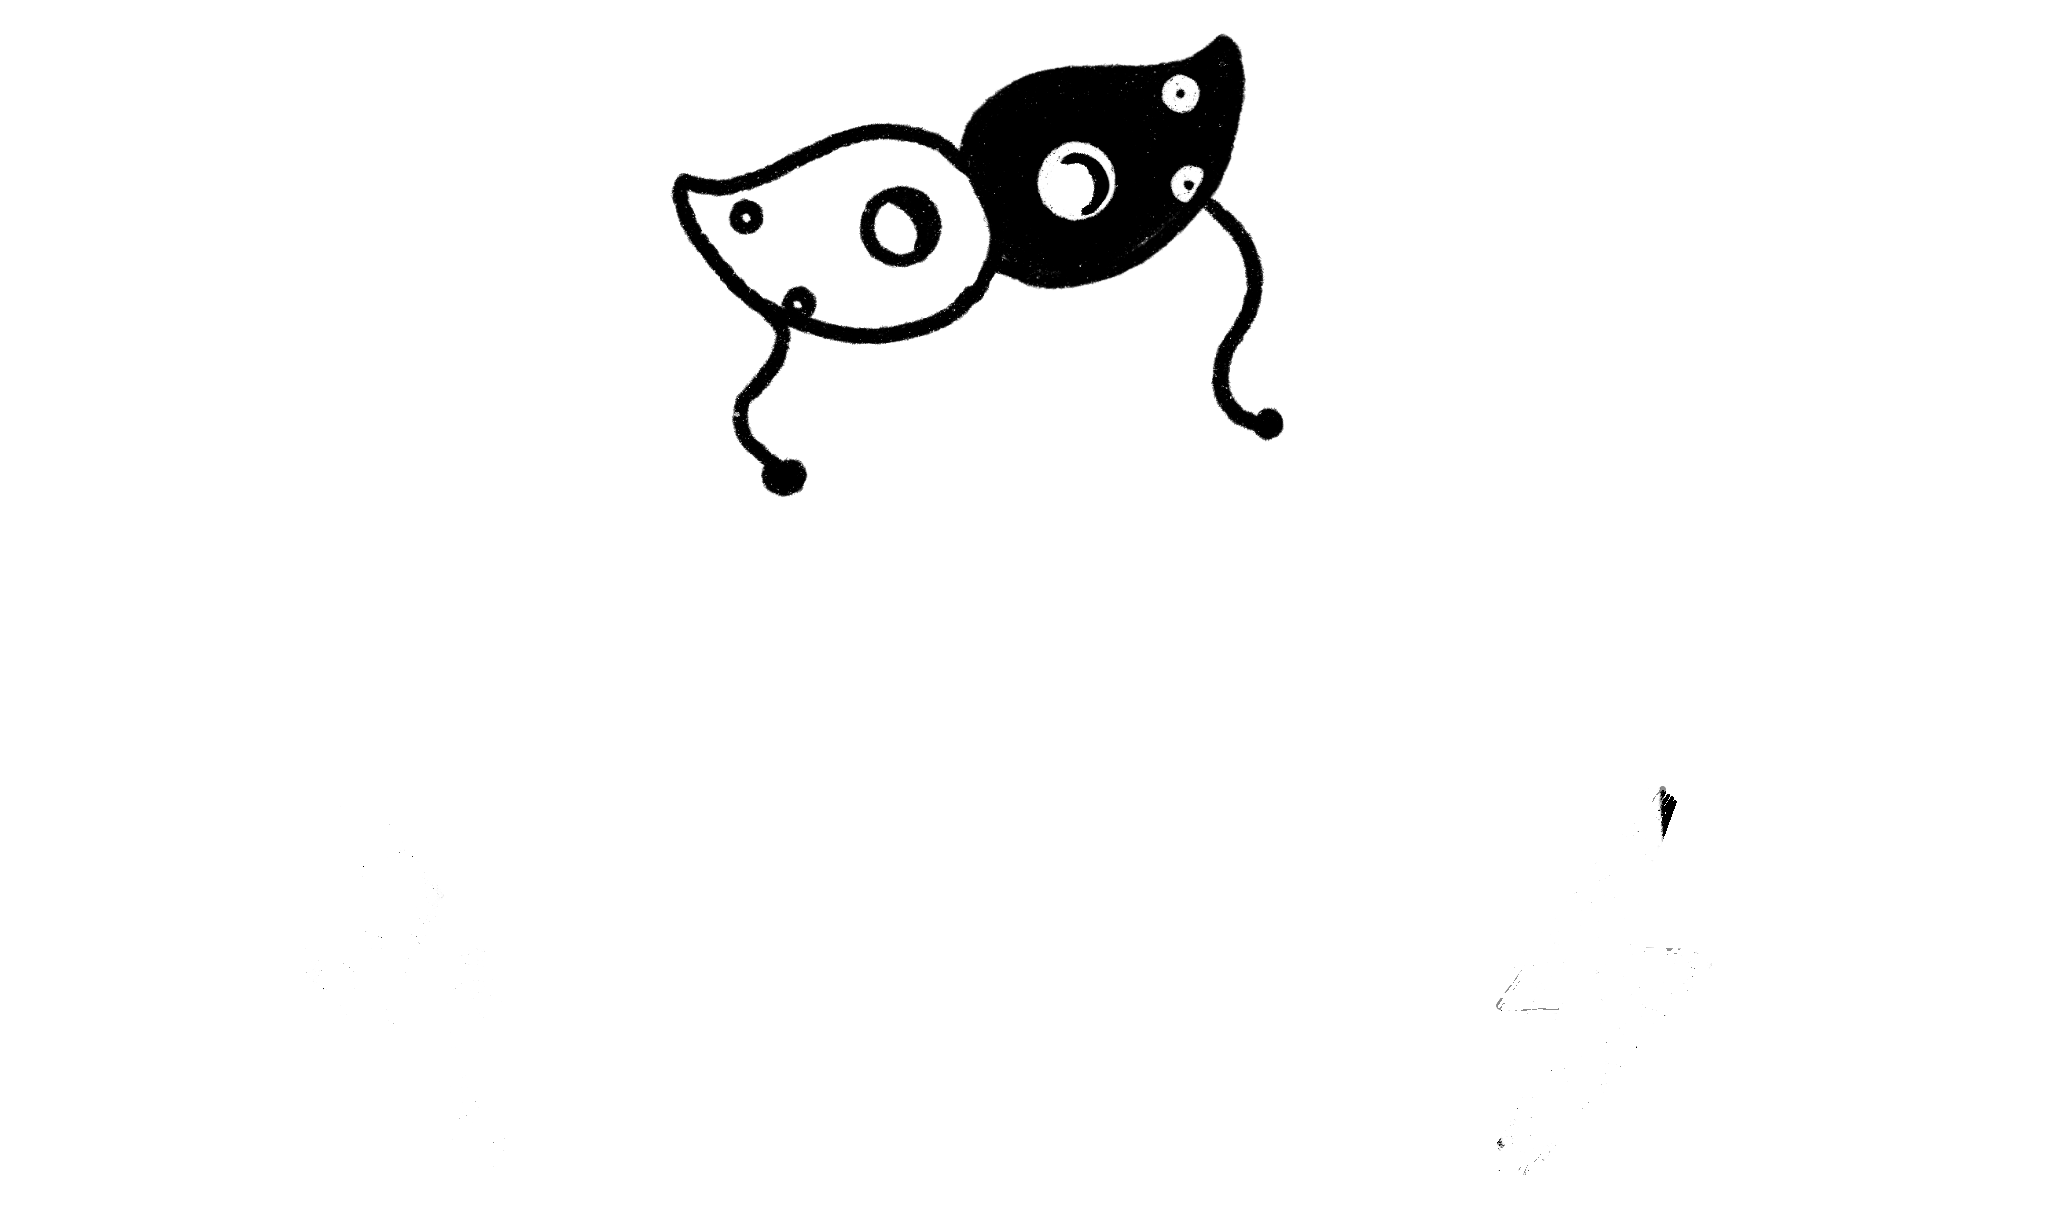 Masquerade Manor